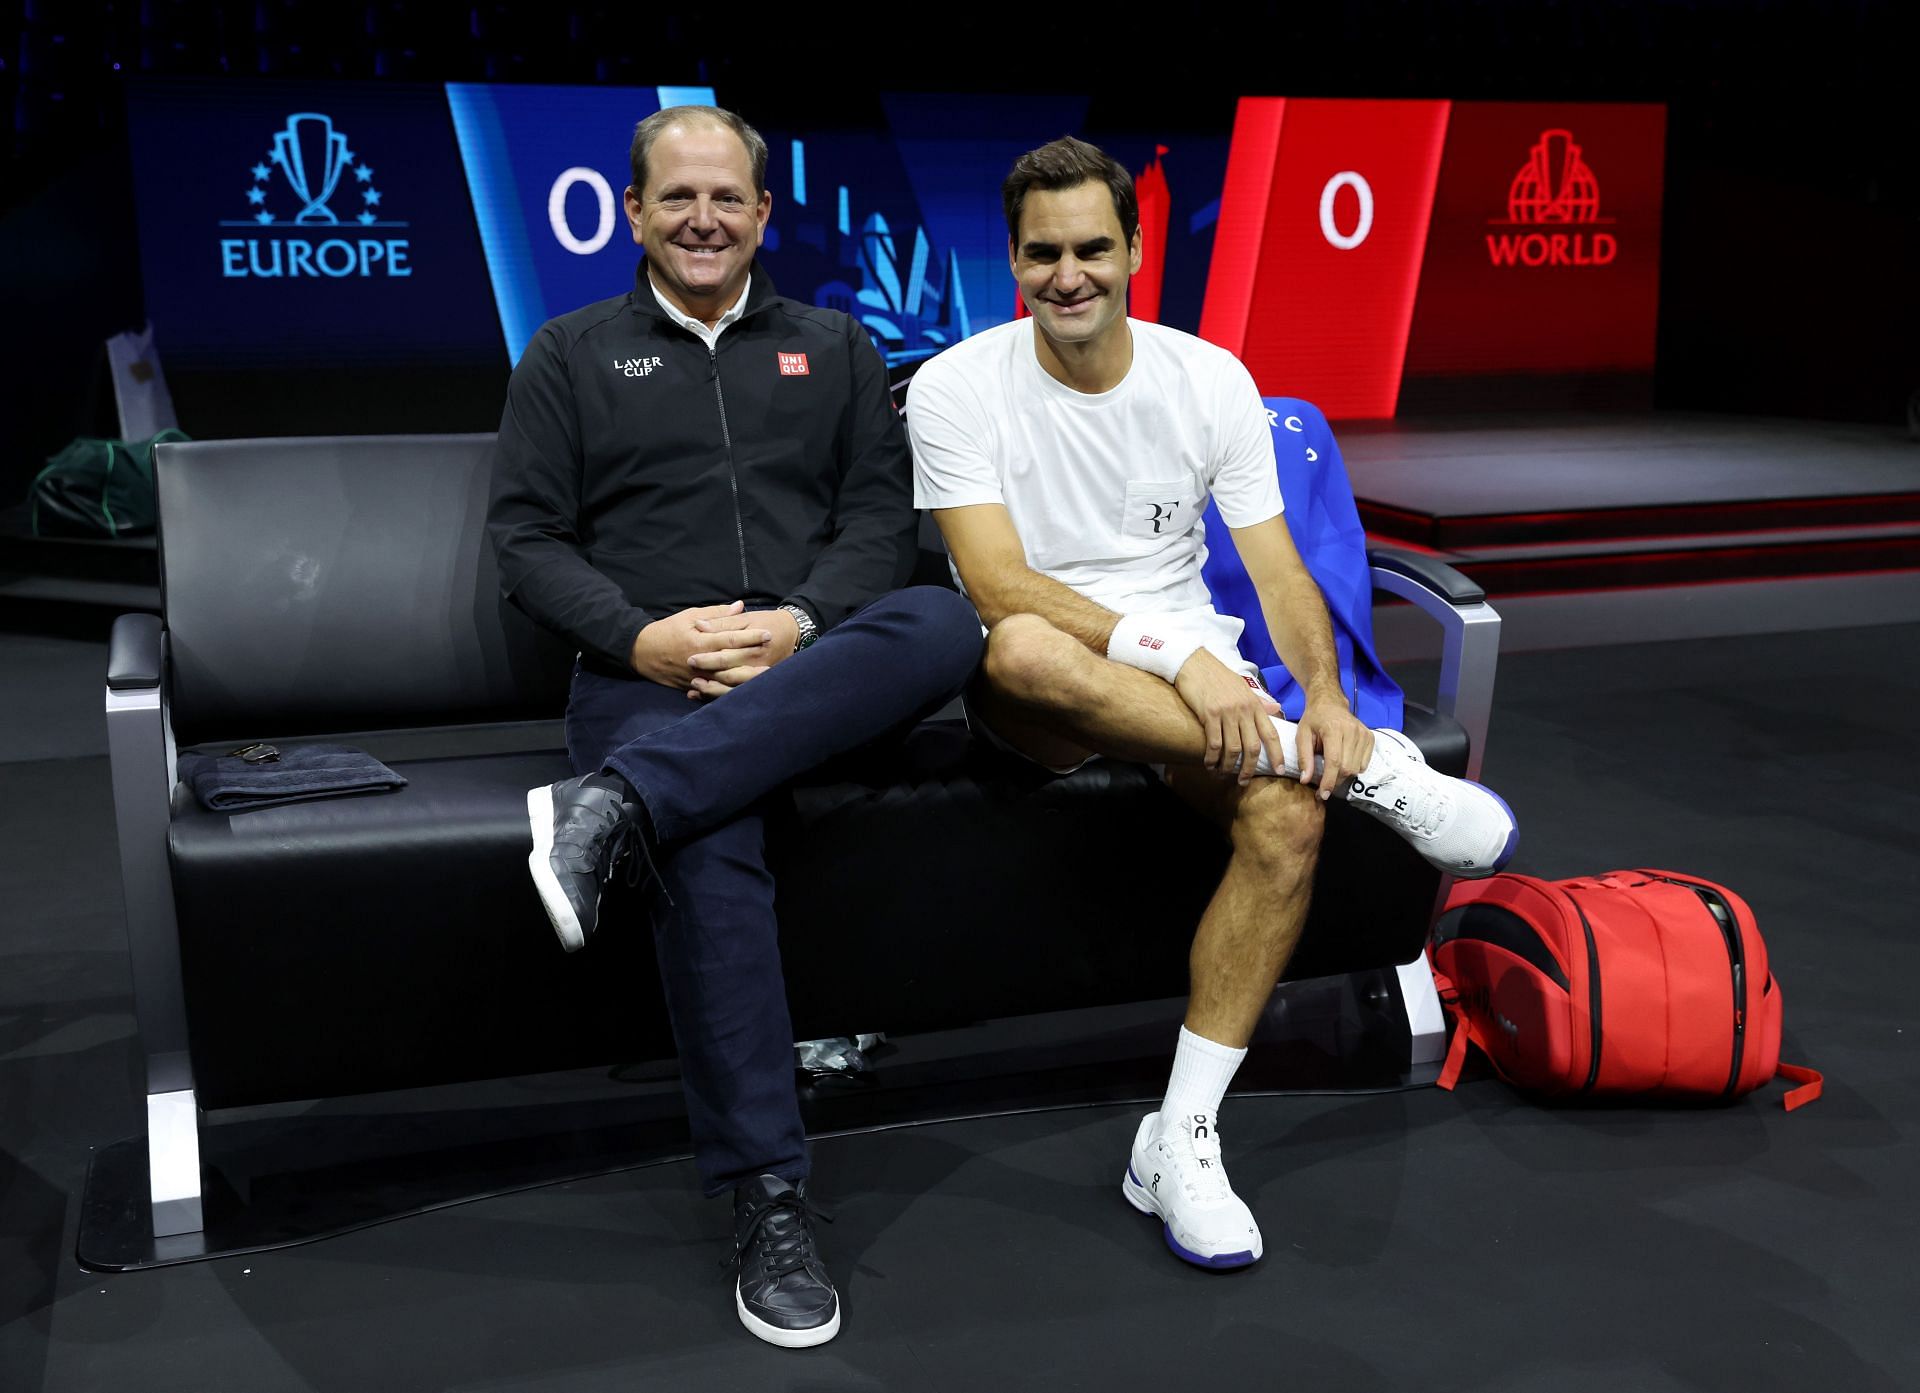 Roger Federer at the Laver Cup 2022